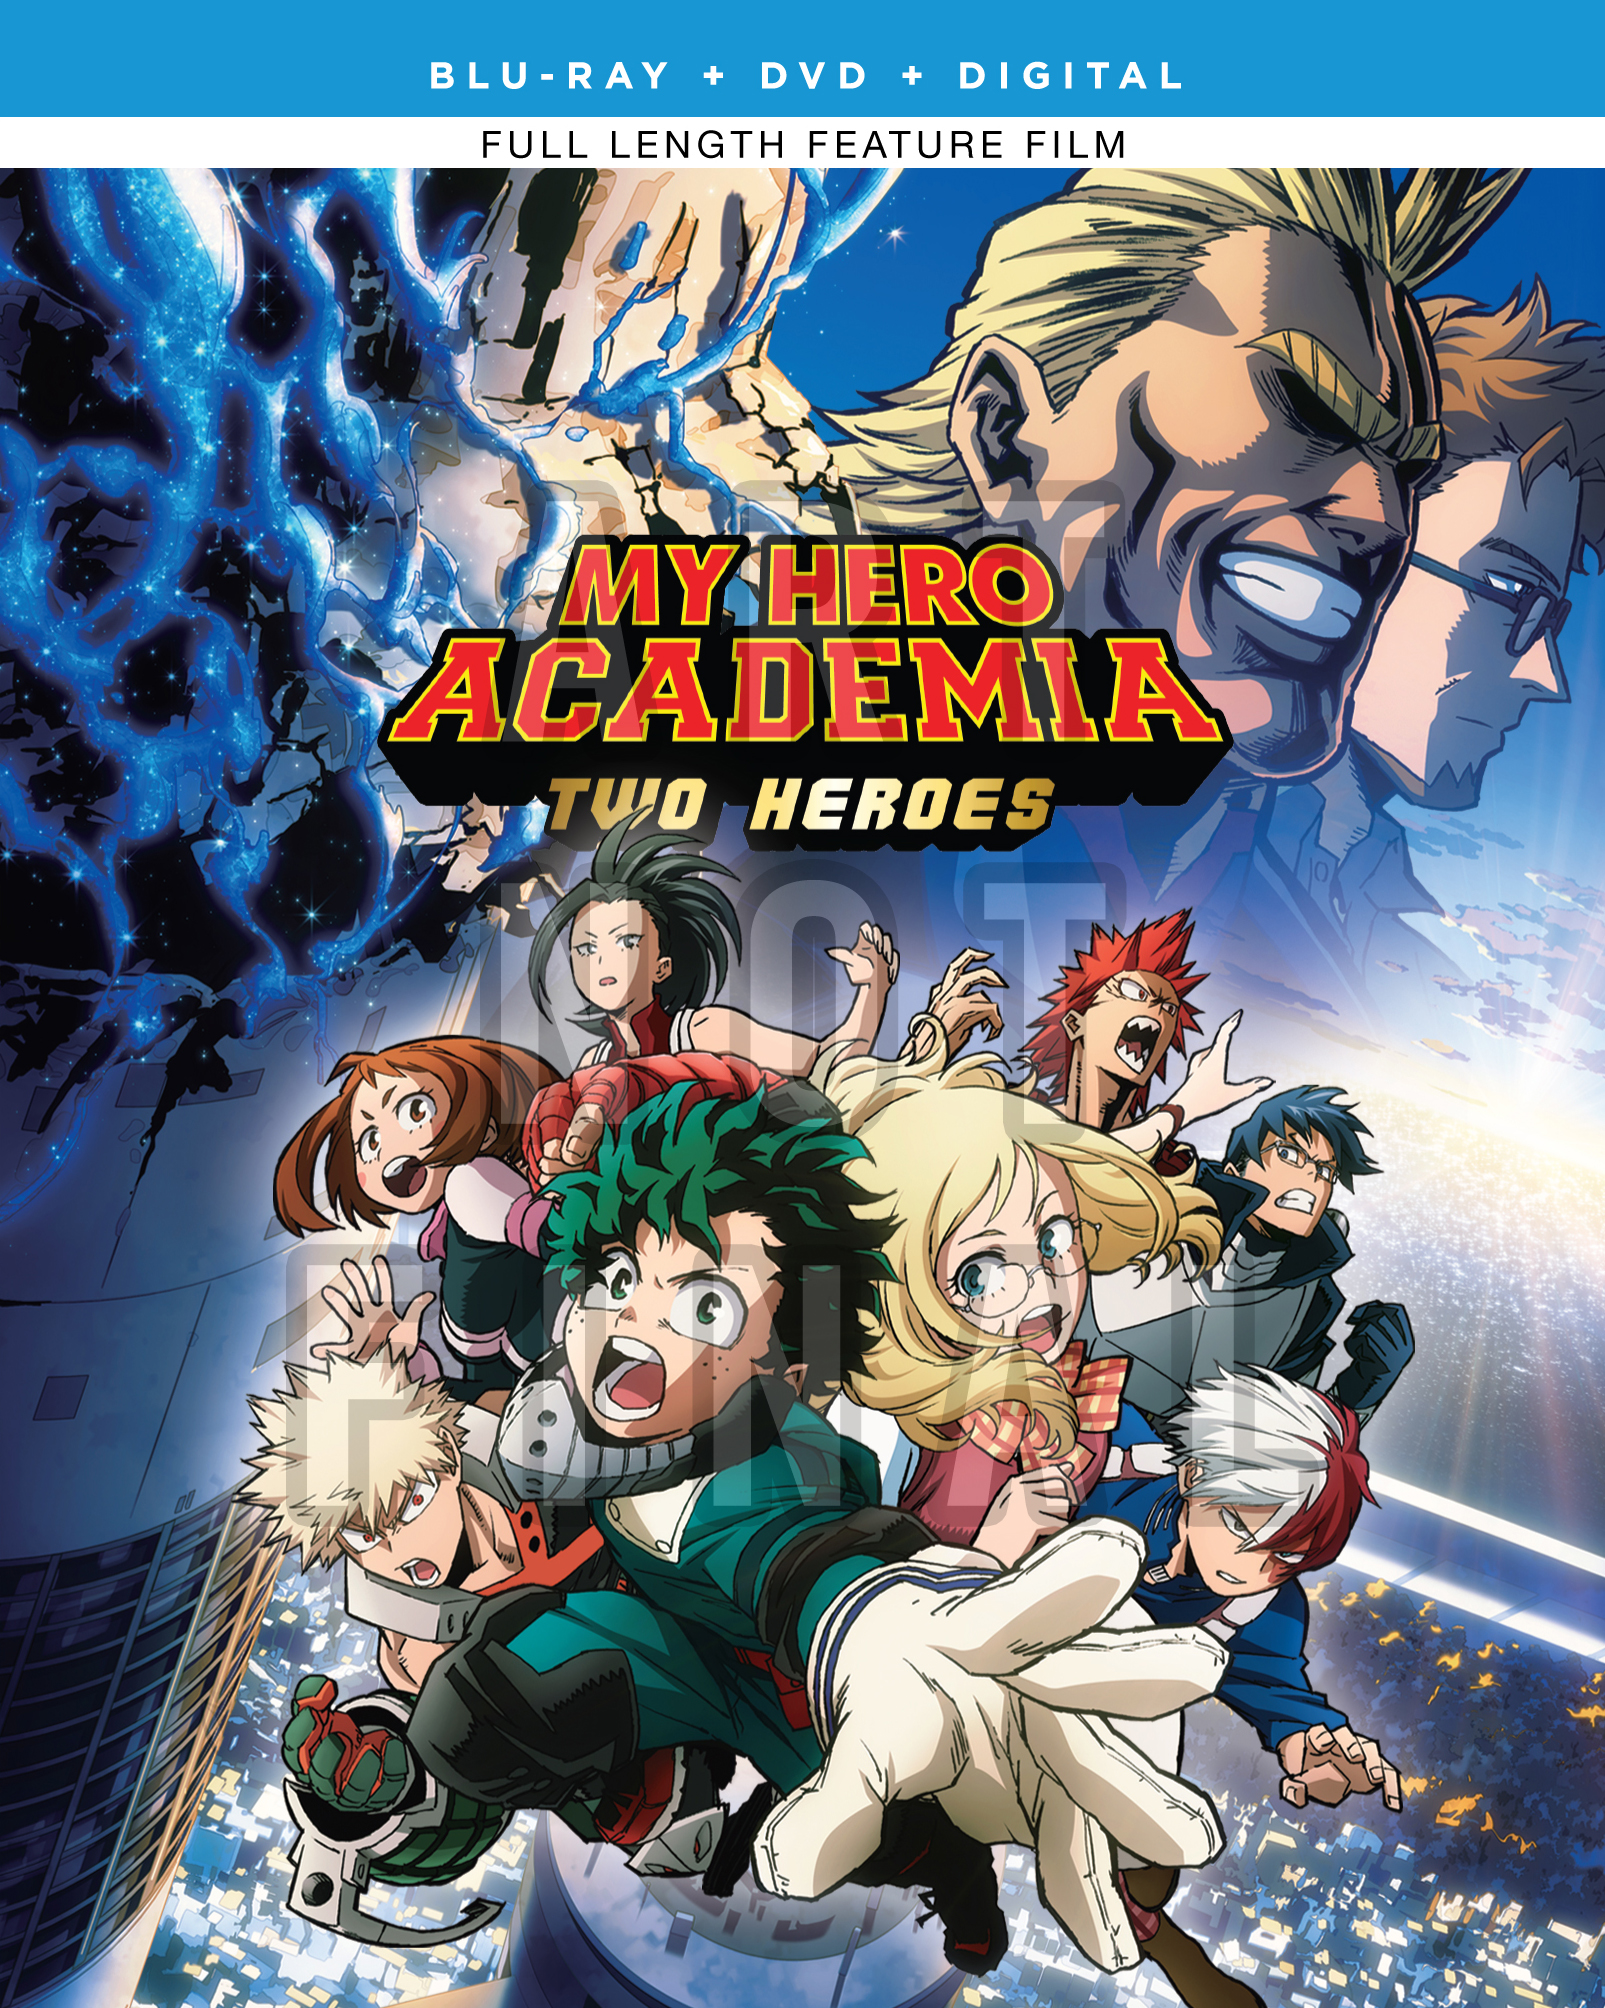 My Hero Academia · The Movie - World Heroes' Mission (Blu-ray) (2022)